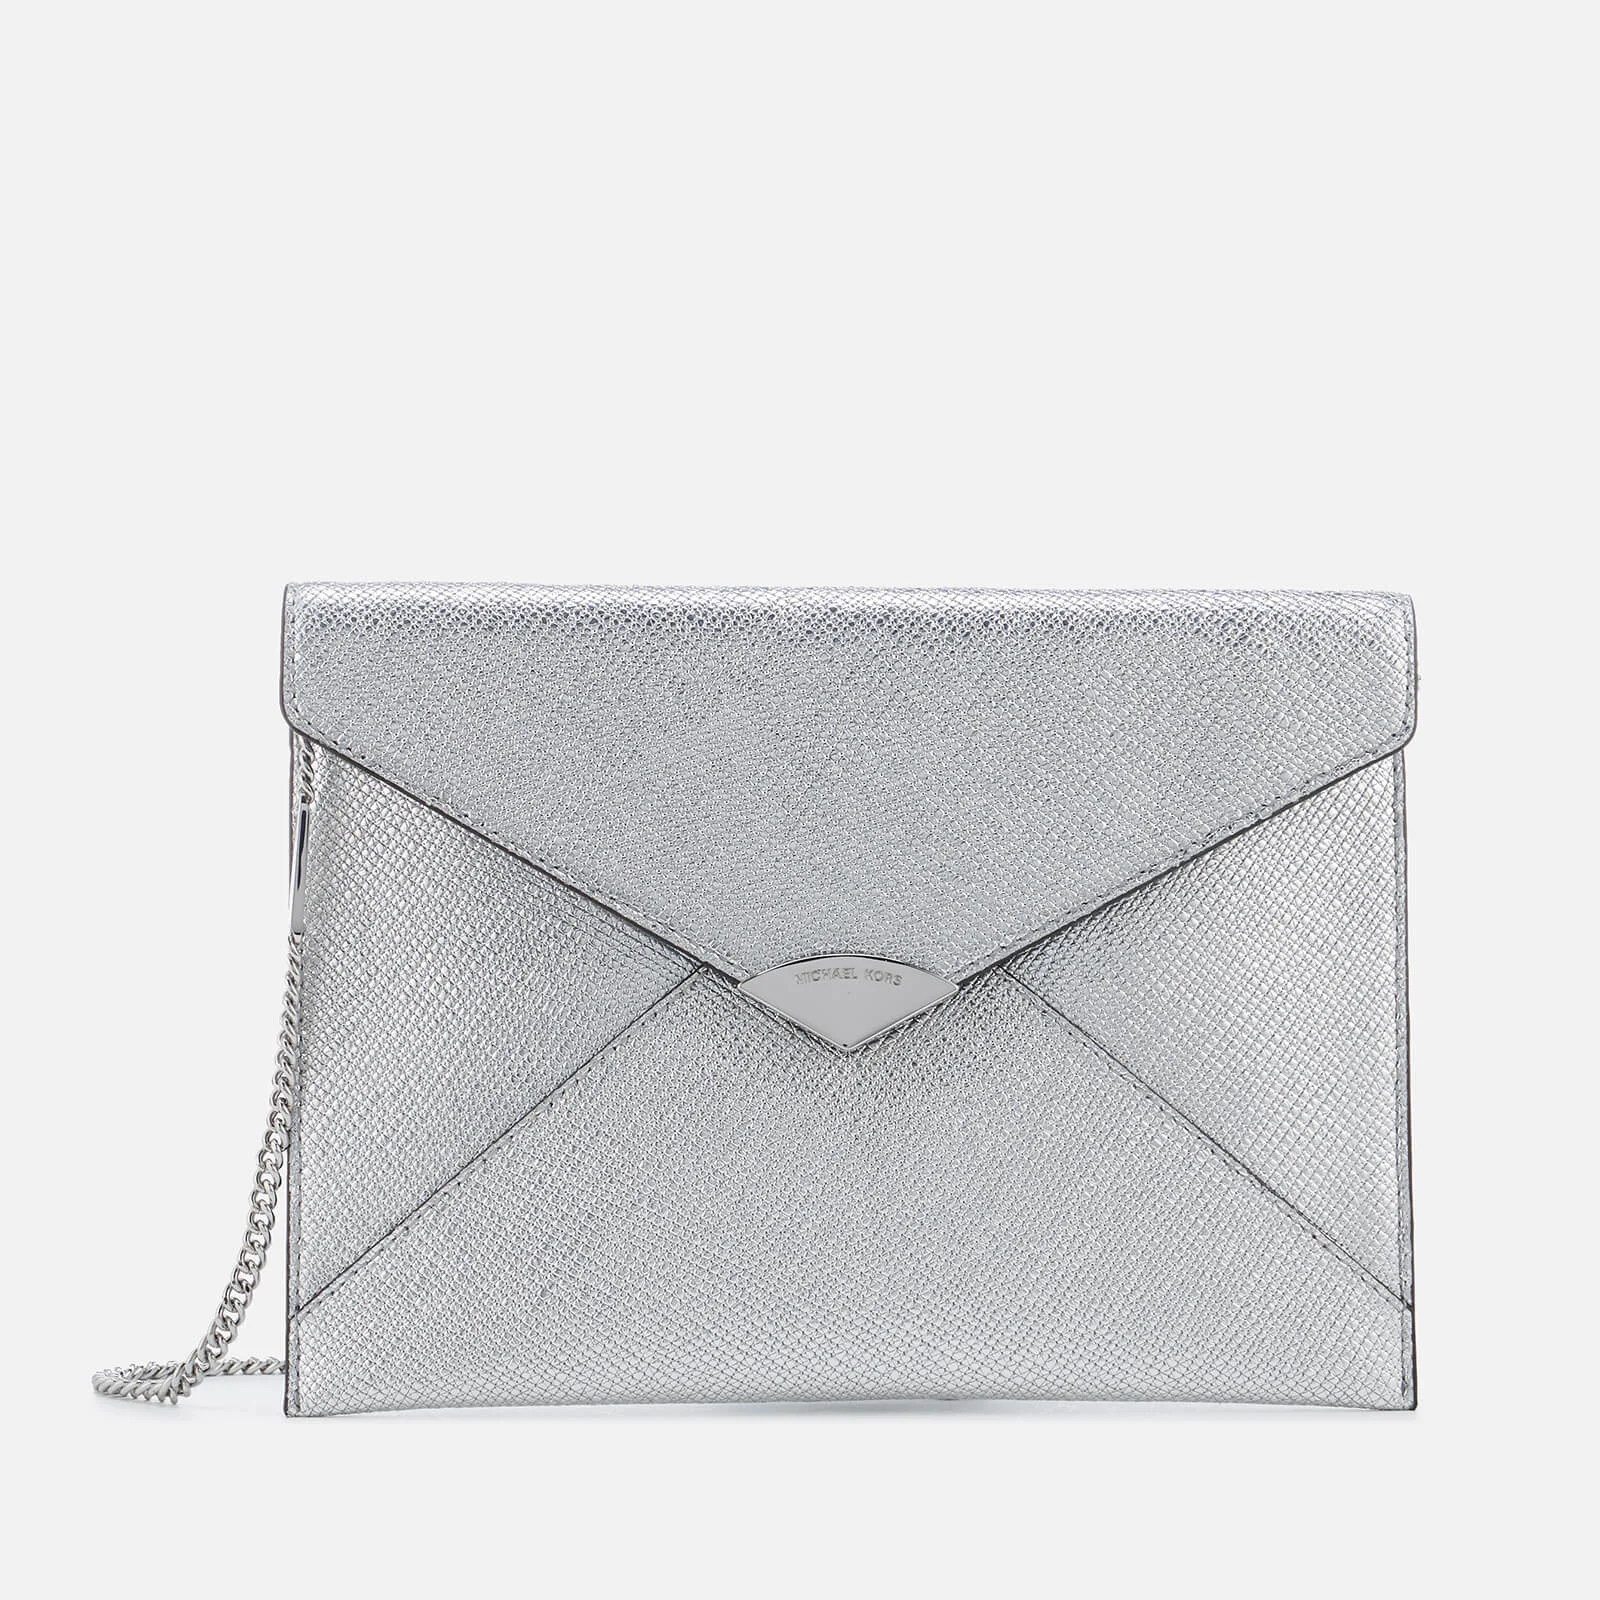 MICHAEL MICHAEL KORS Women's Large Soft Envelope Clutch Bag - Silver Image 1